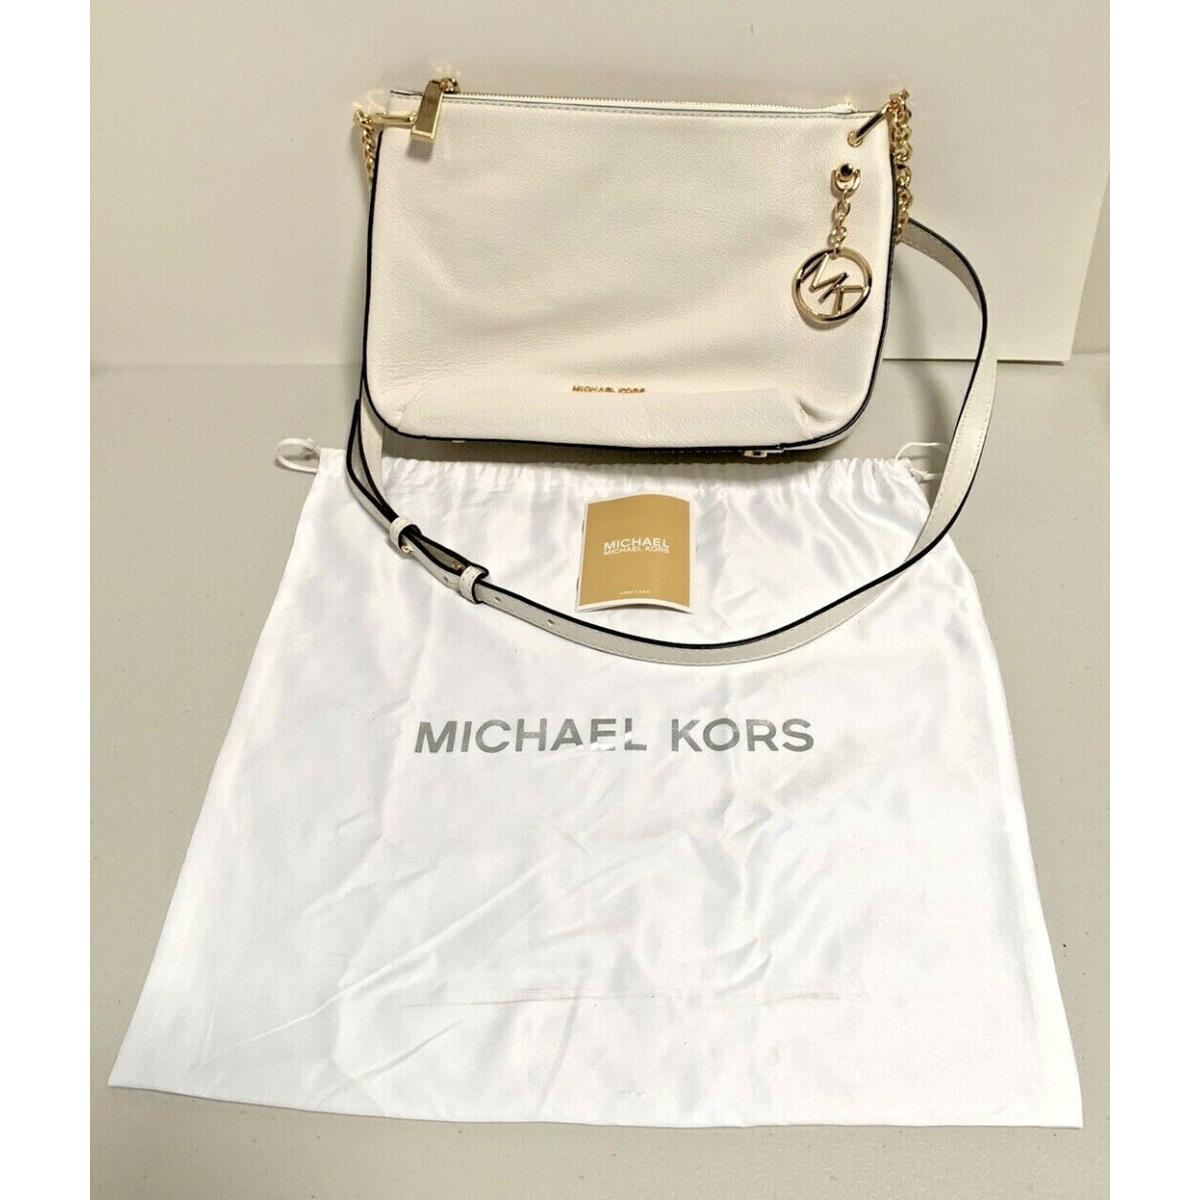 Michael Kors Lillie Optic White Leather Shoulder Messenger Bag with Dust Bag